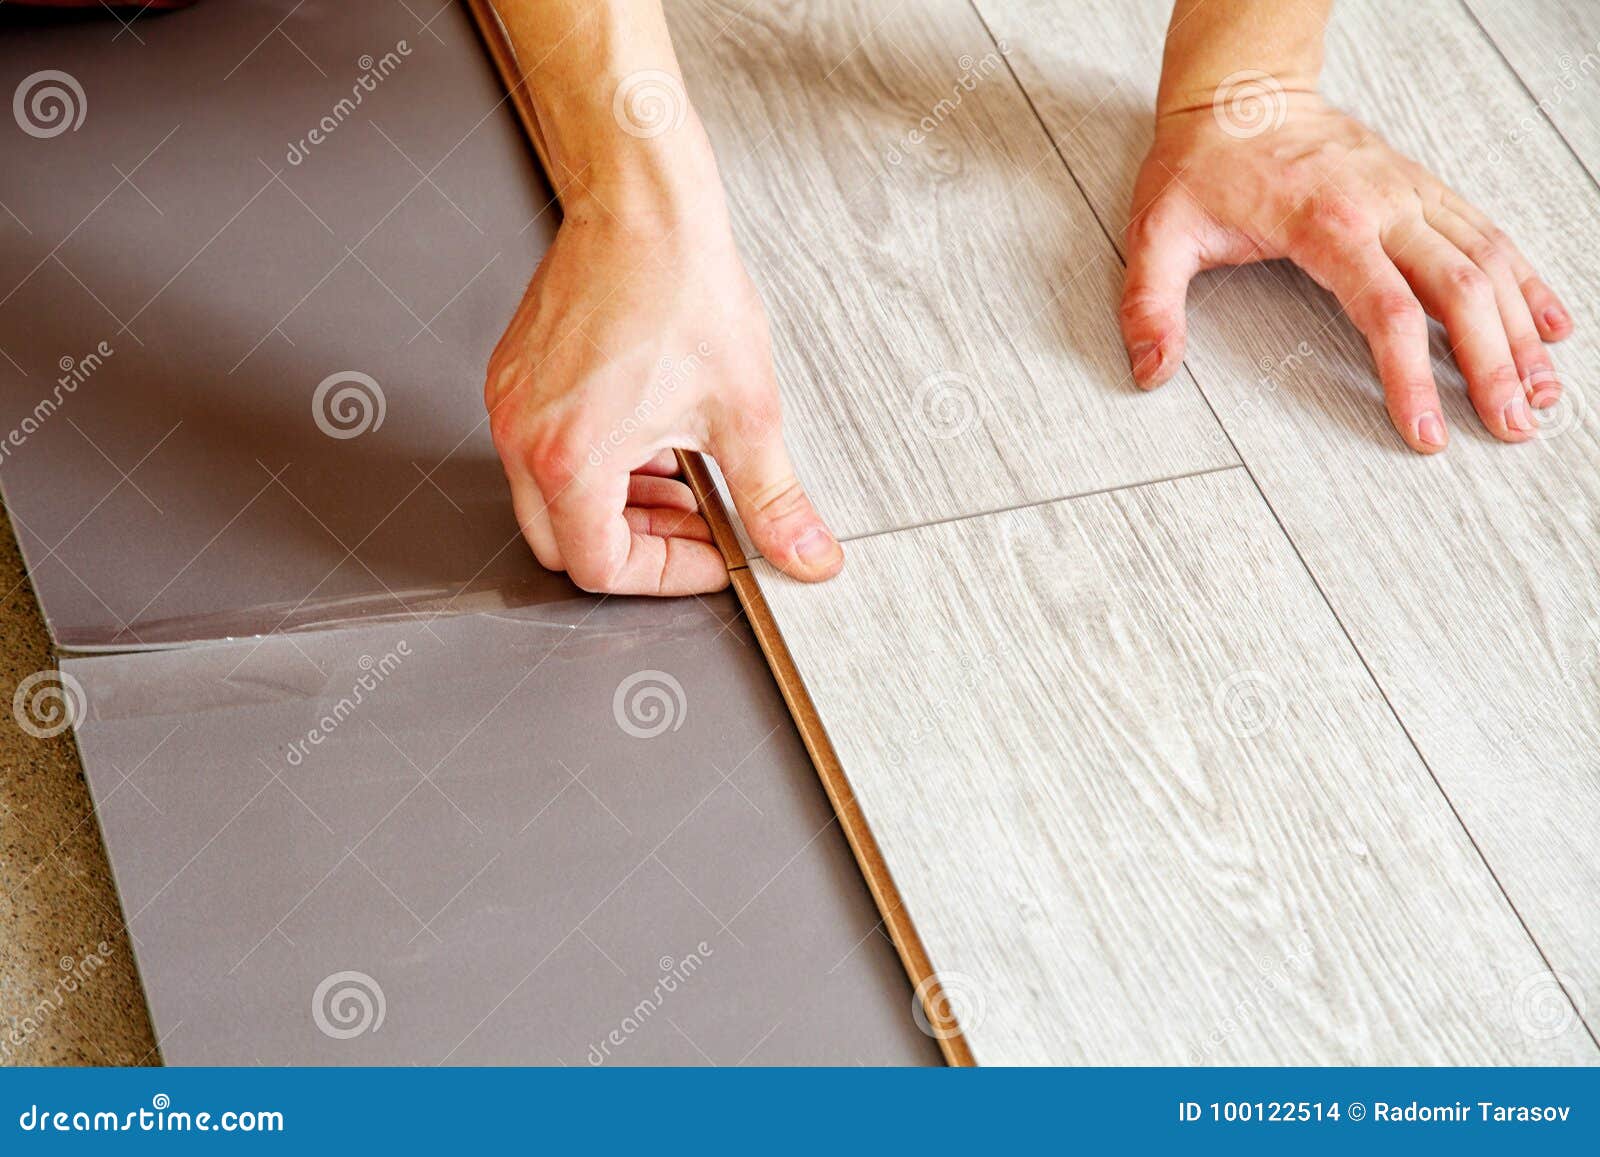 handyman`s hands laying down laminate flooring boards